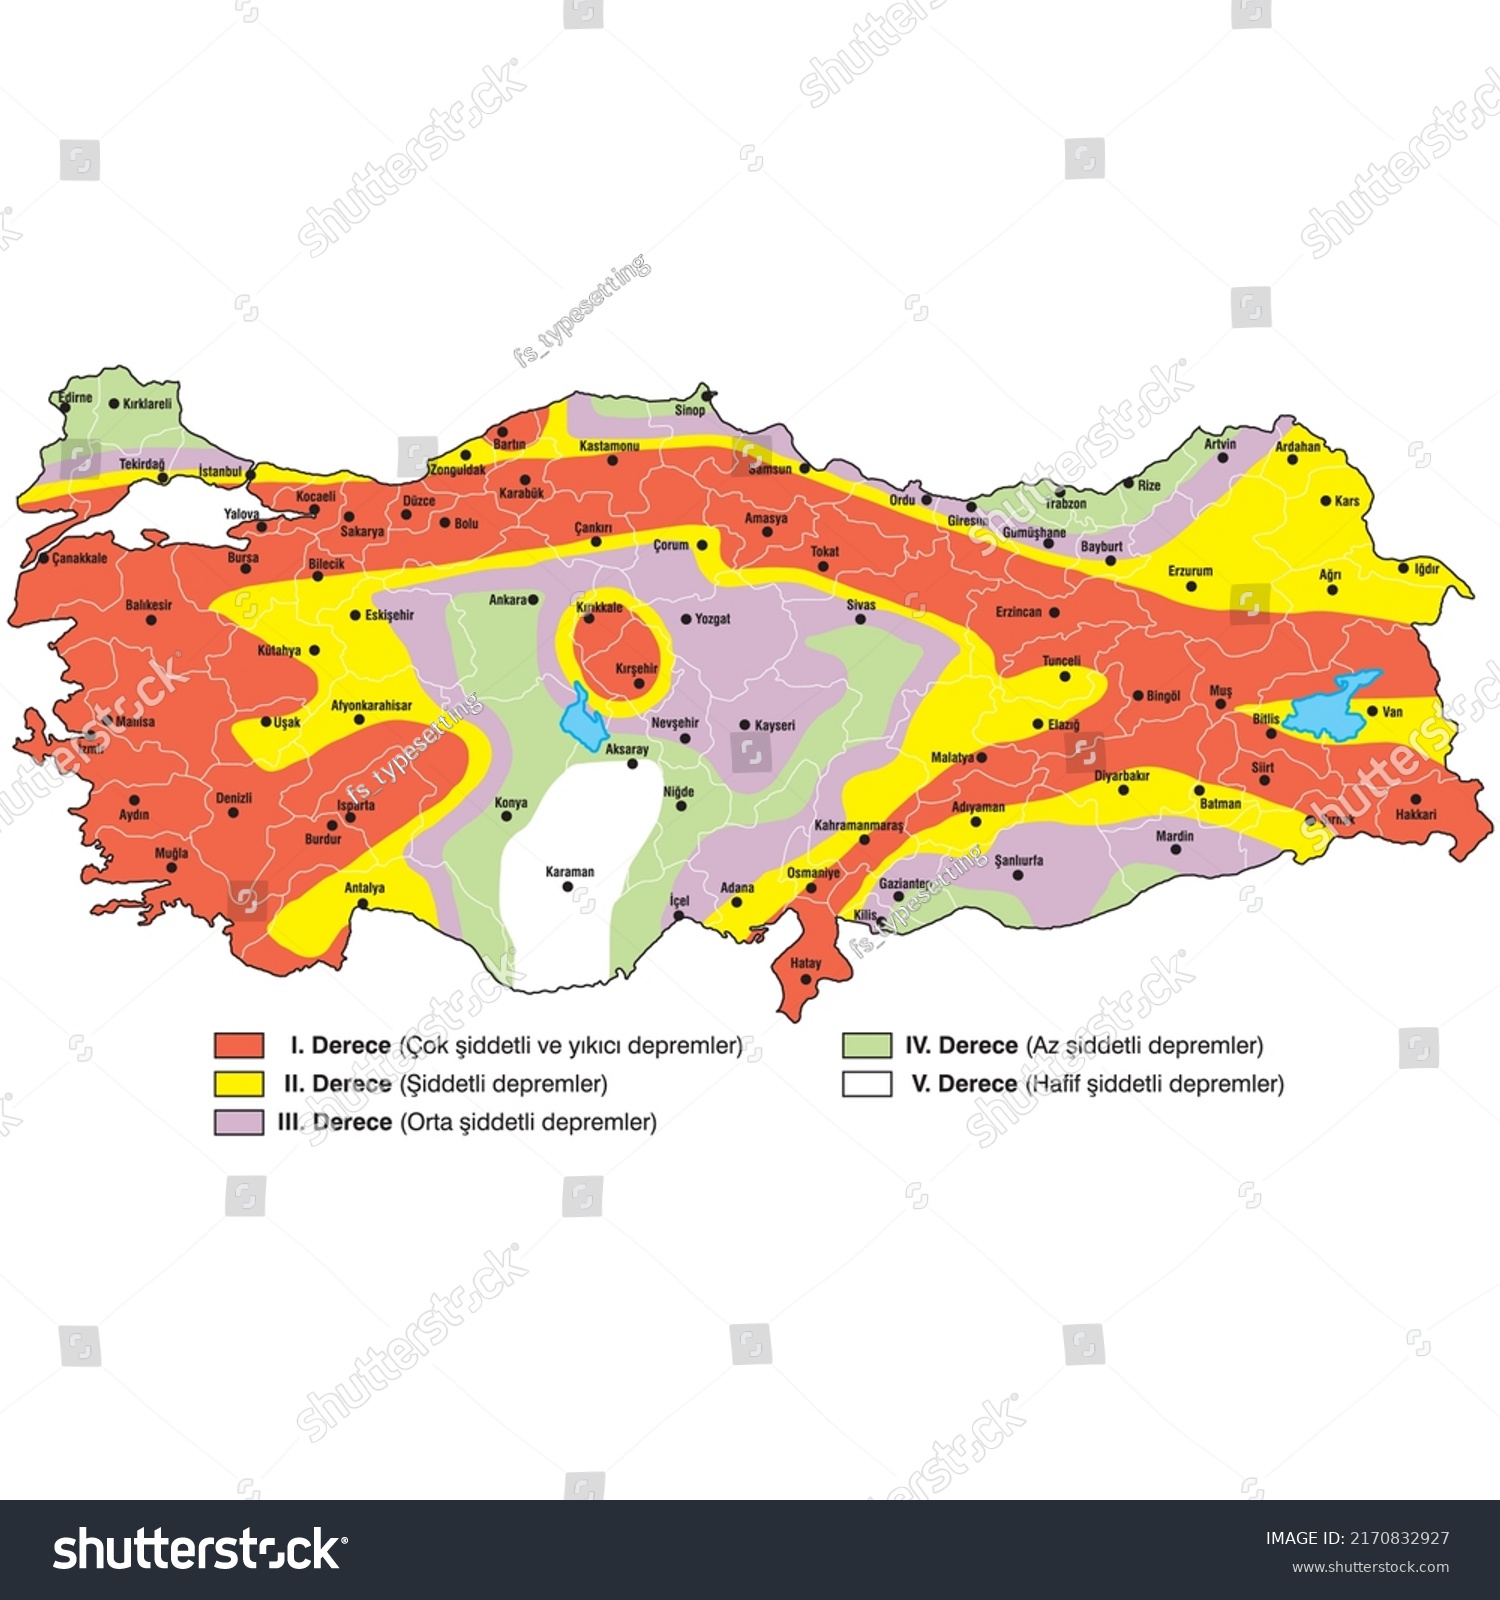 Turkey earthquake map, country maps, maps #2170832927